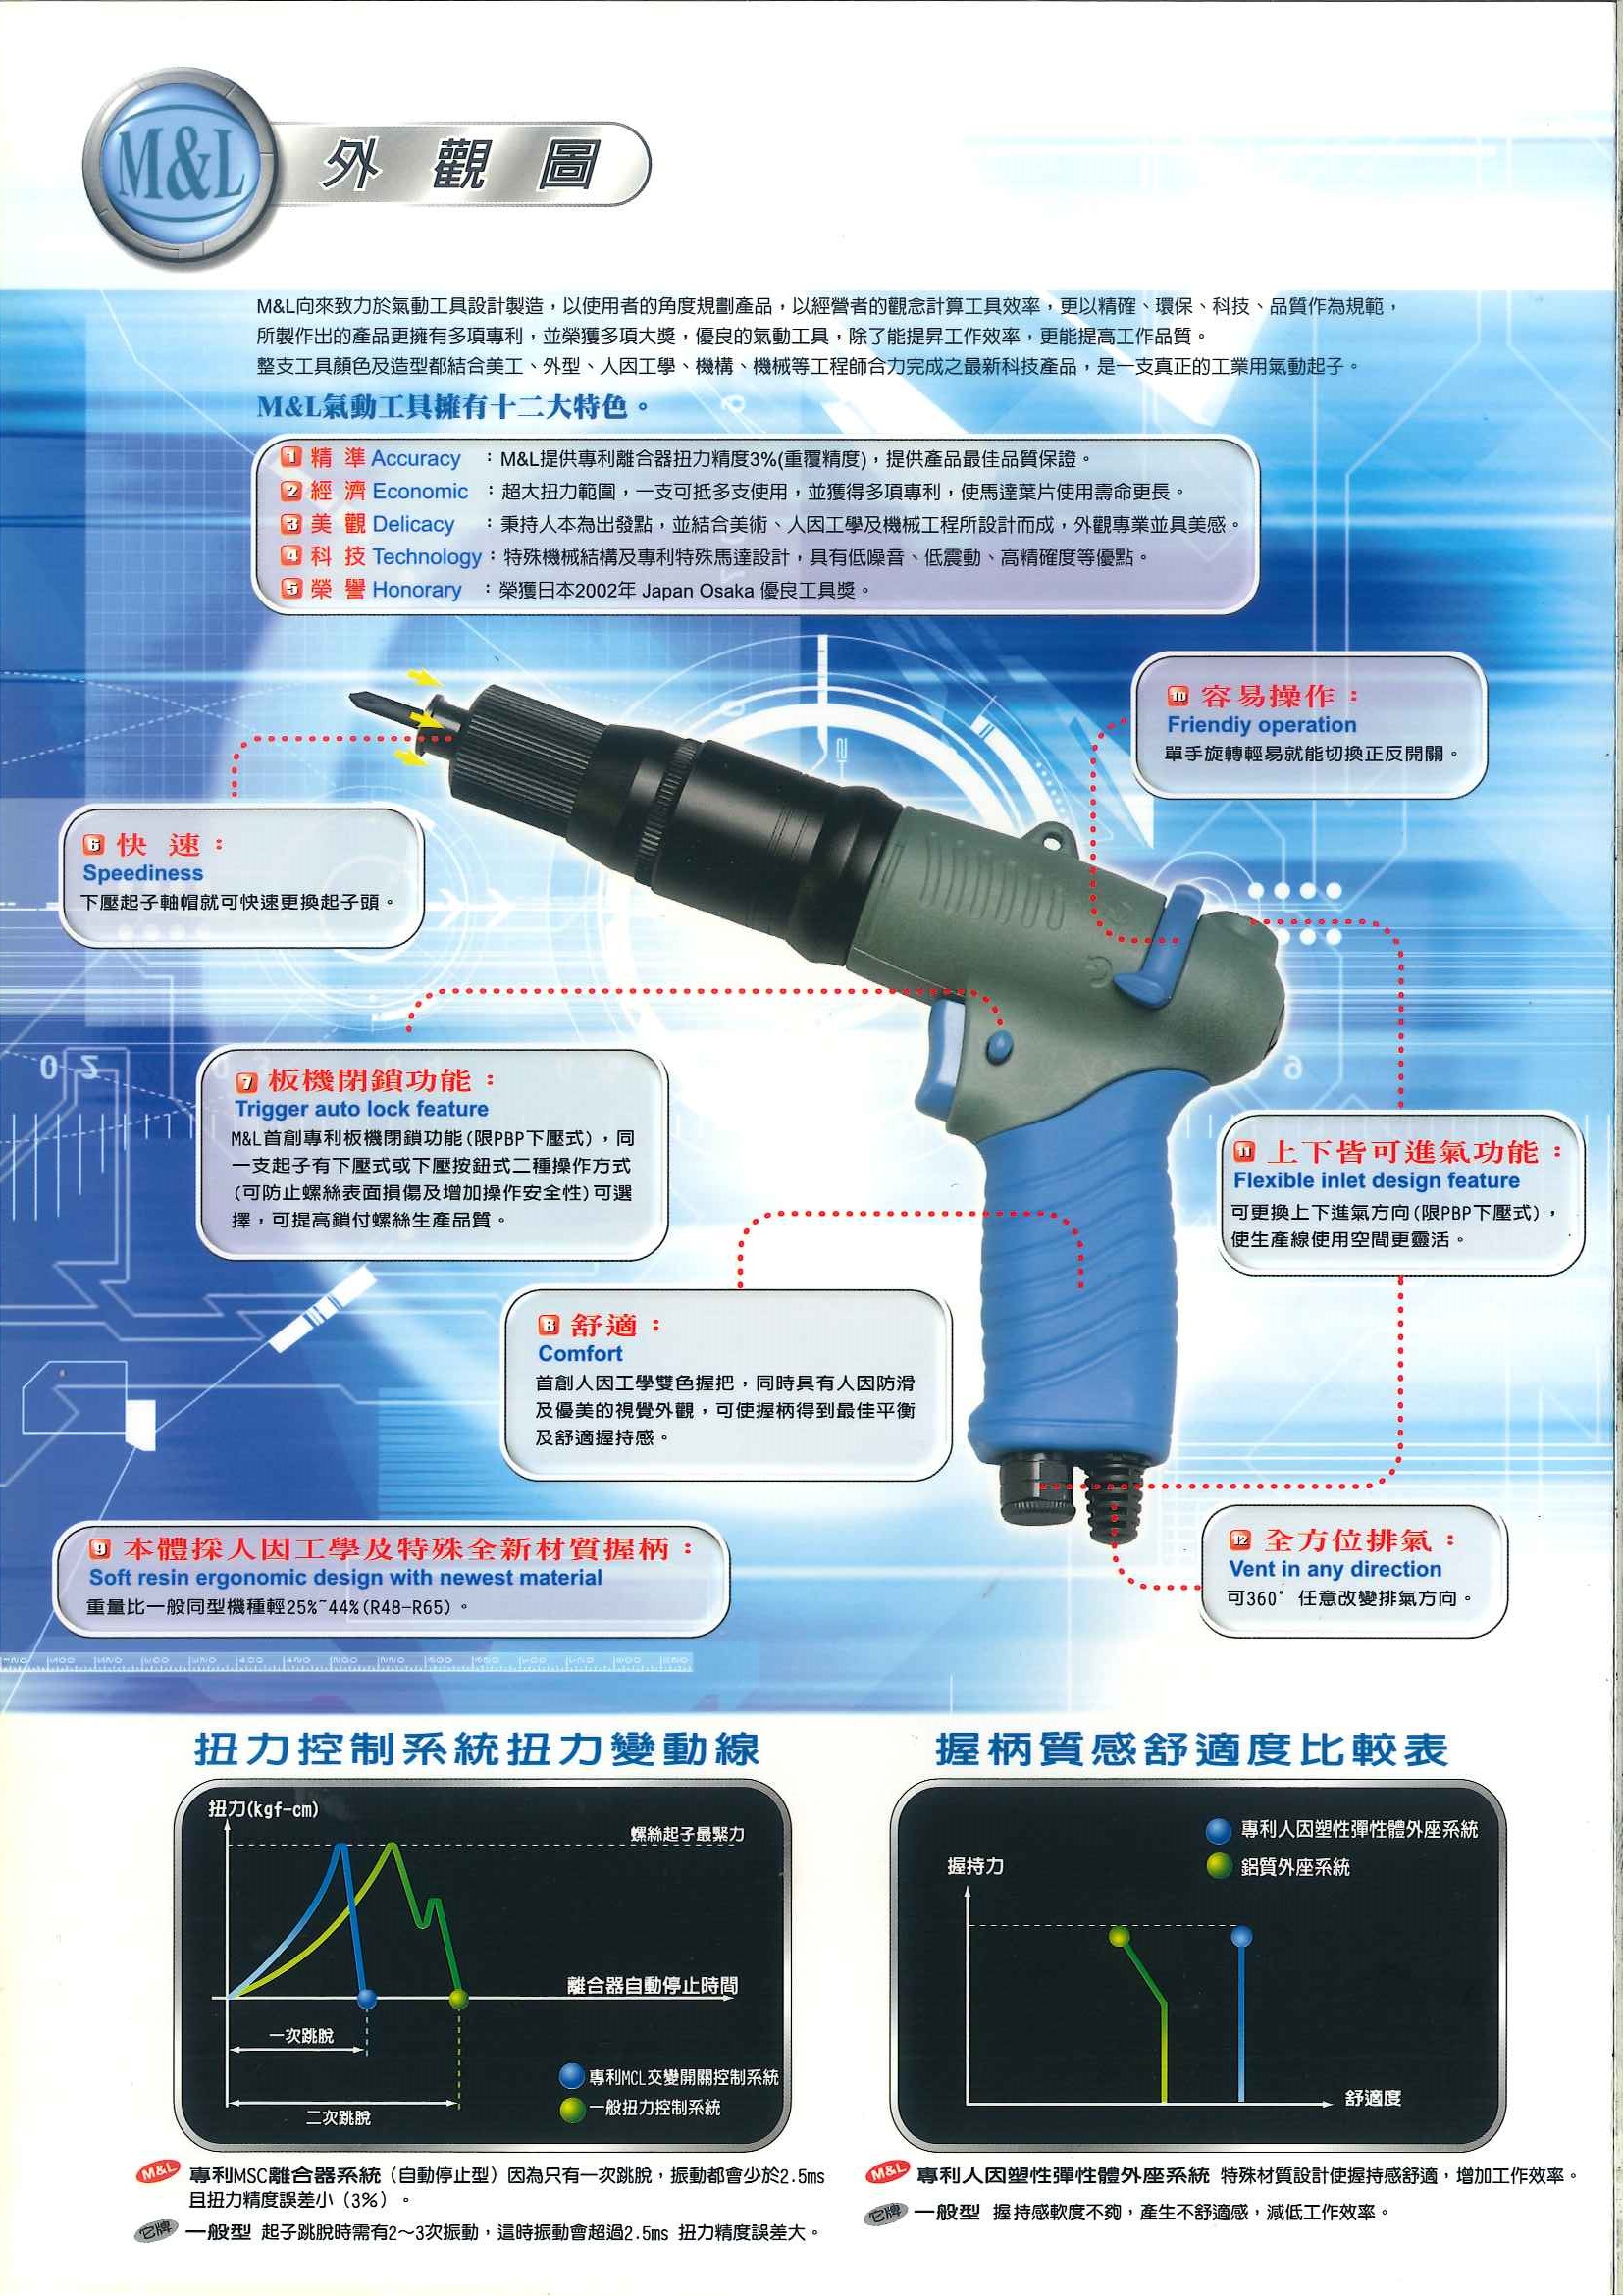 M&L 台湾美之岚 R系列-枪型下压按钮式全自动气动起子-PBP